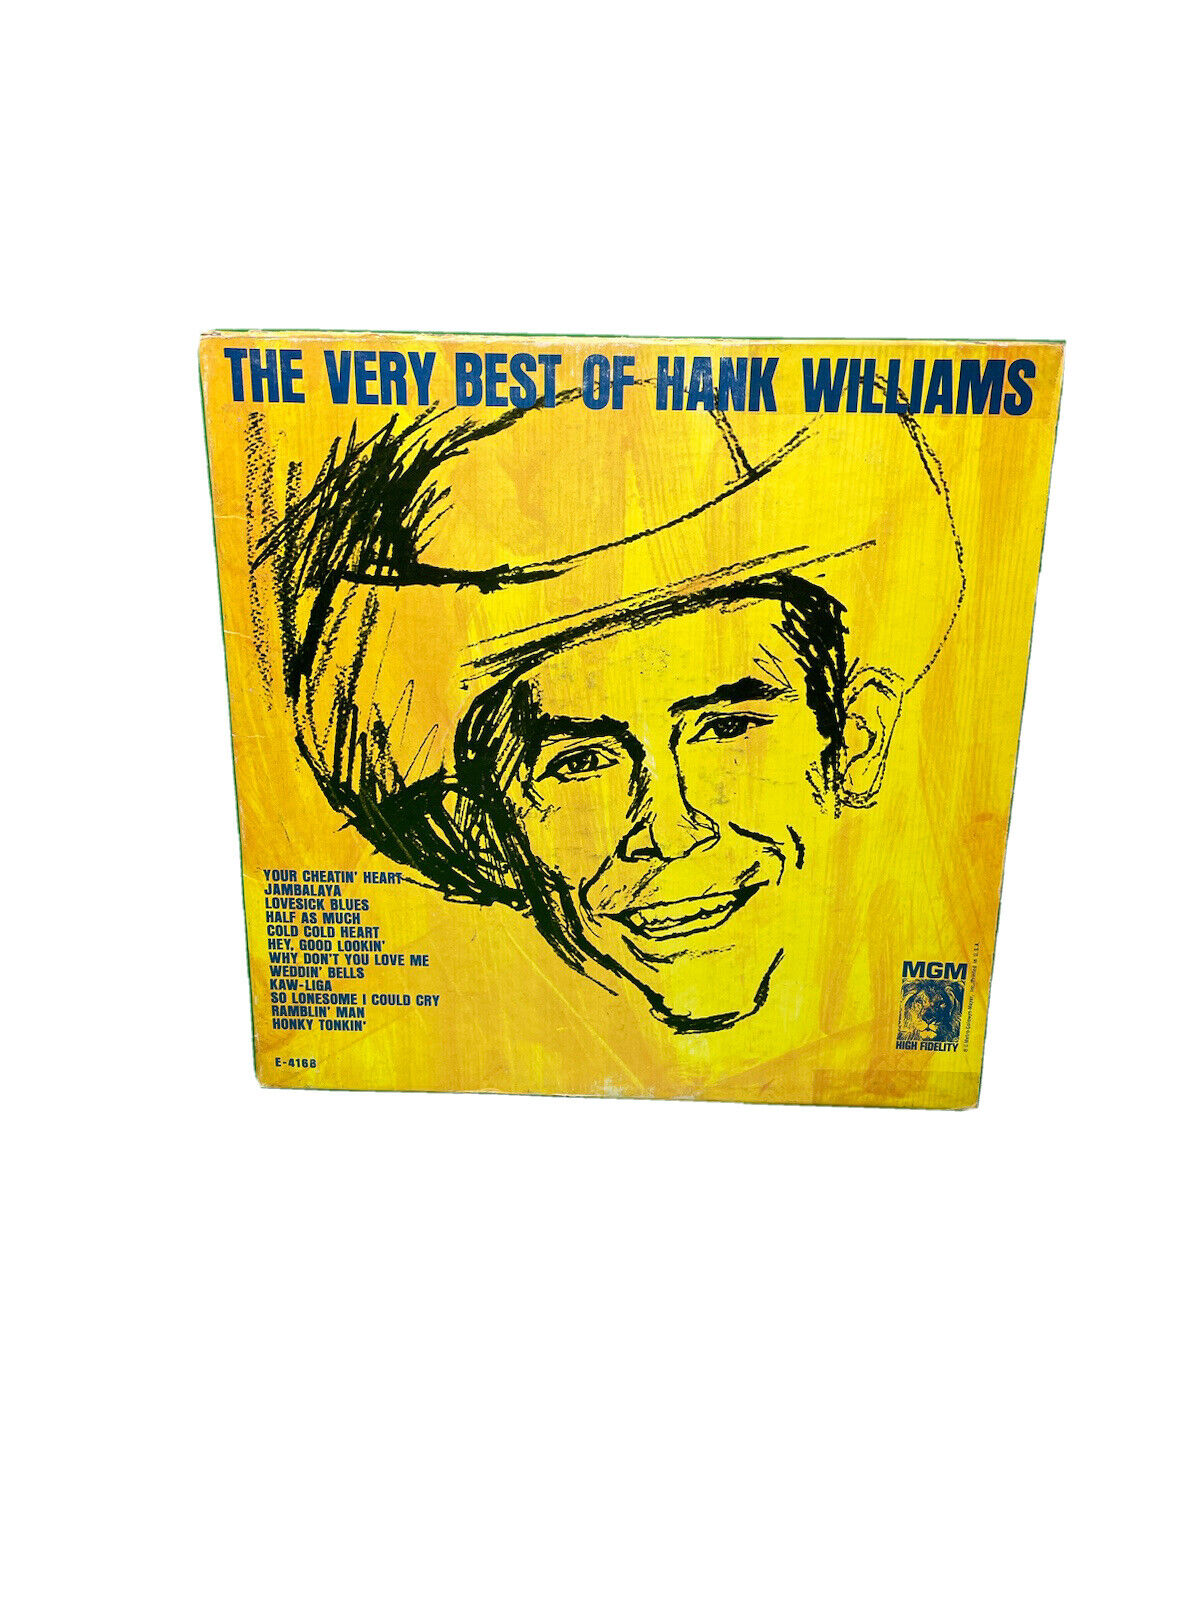 Hank Williams – The Very Best Of Hank Williams Vinyl LP Record Album VG VG Vinyl